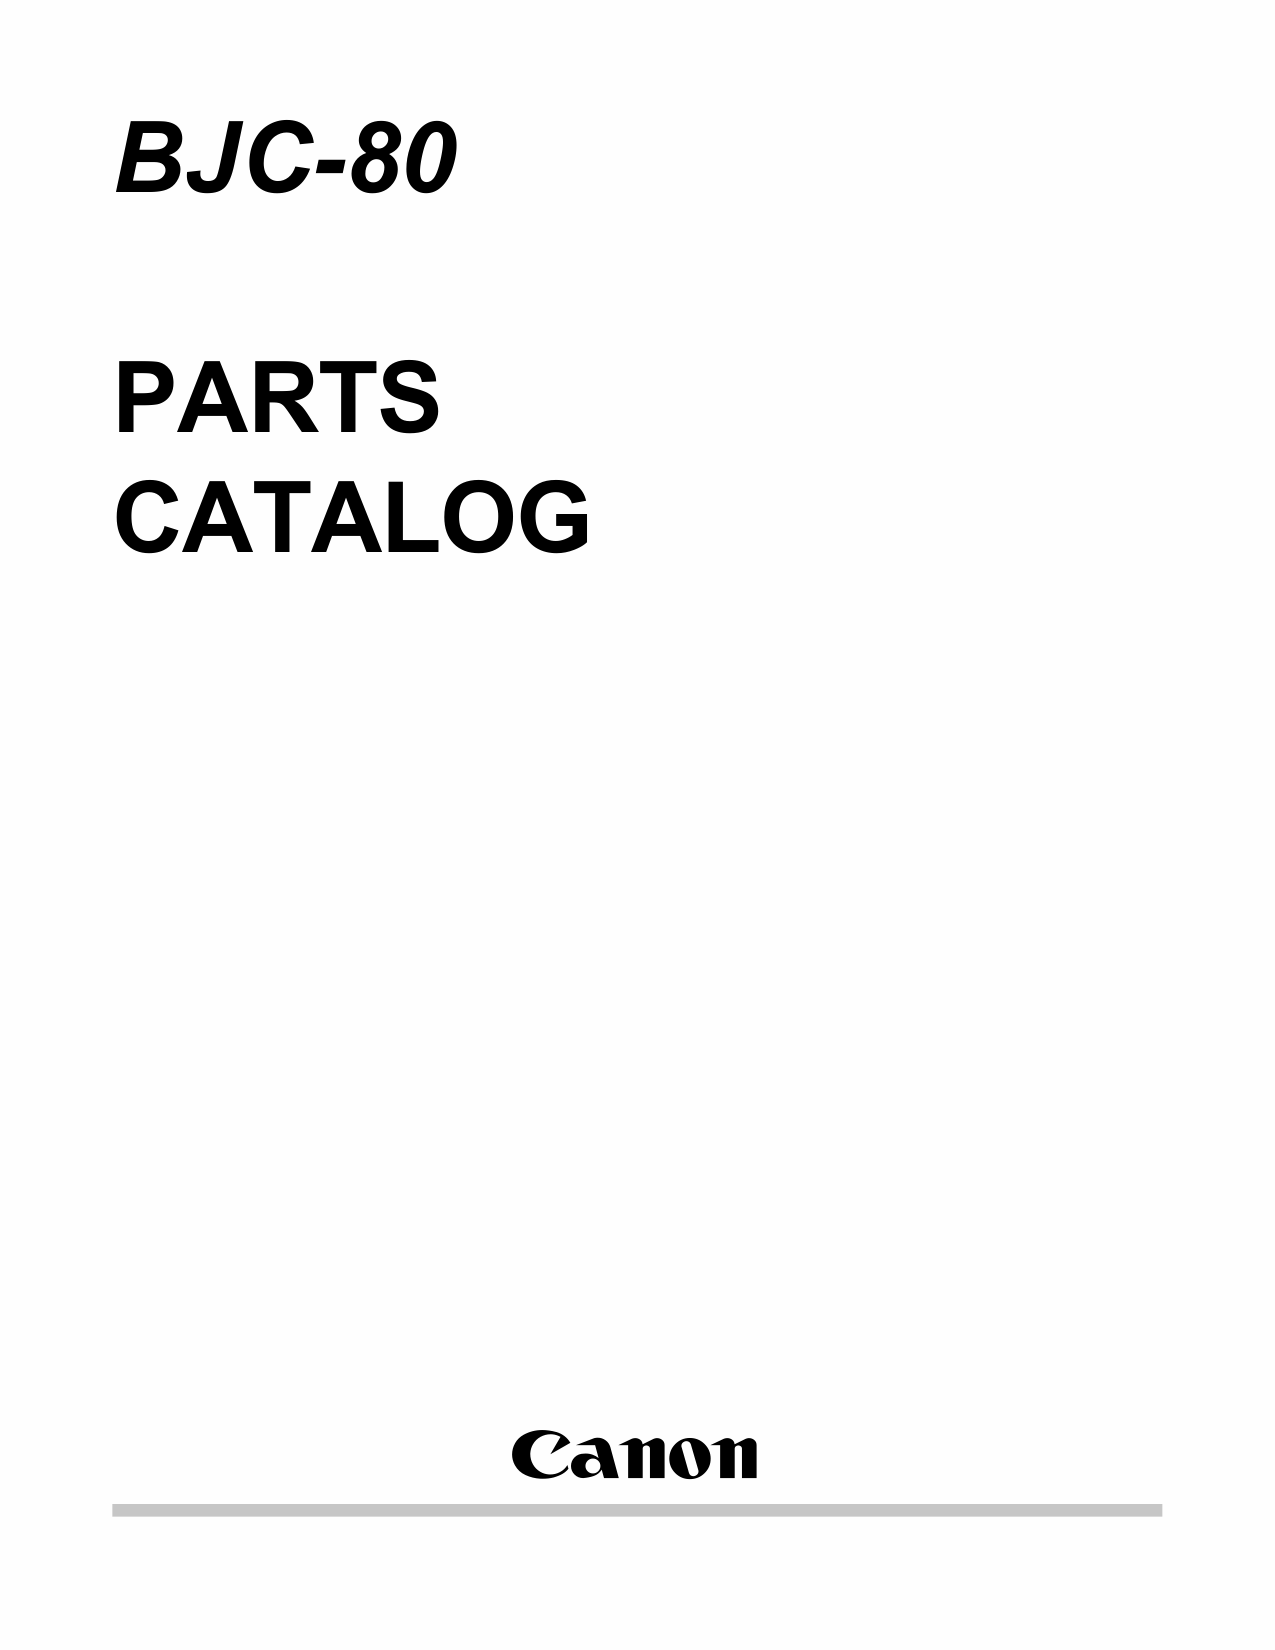 Canon BubbleJet BJC-80 Parts Catalog Manual-1